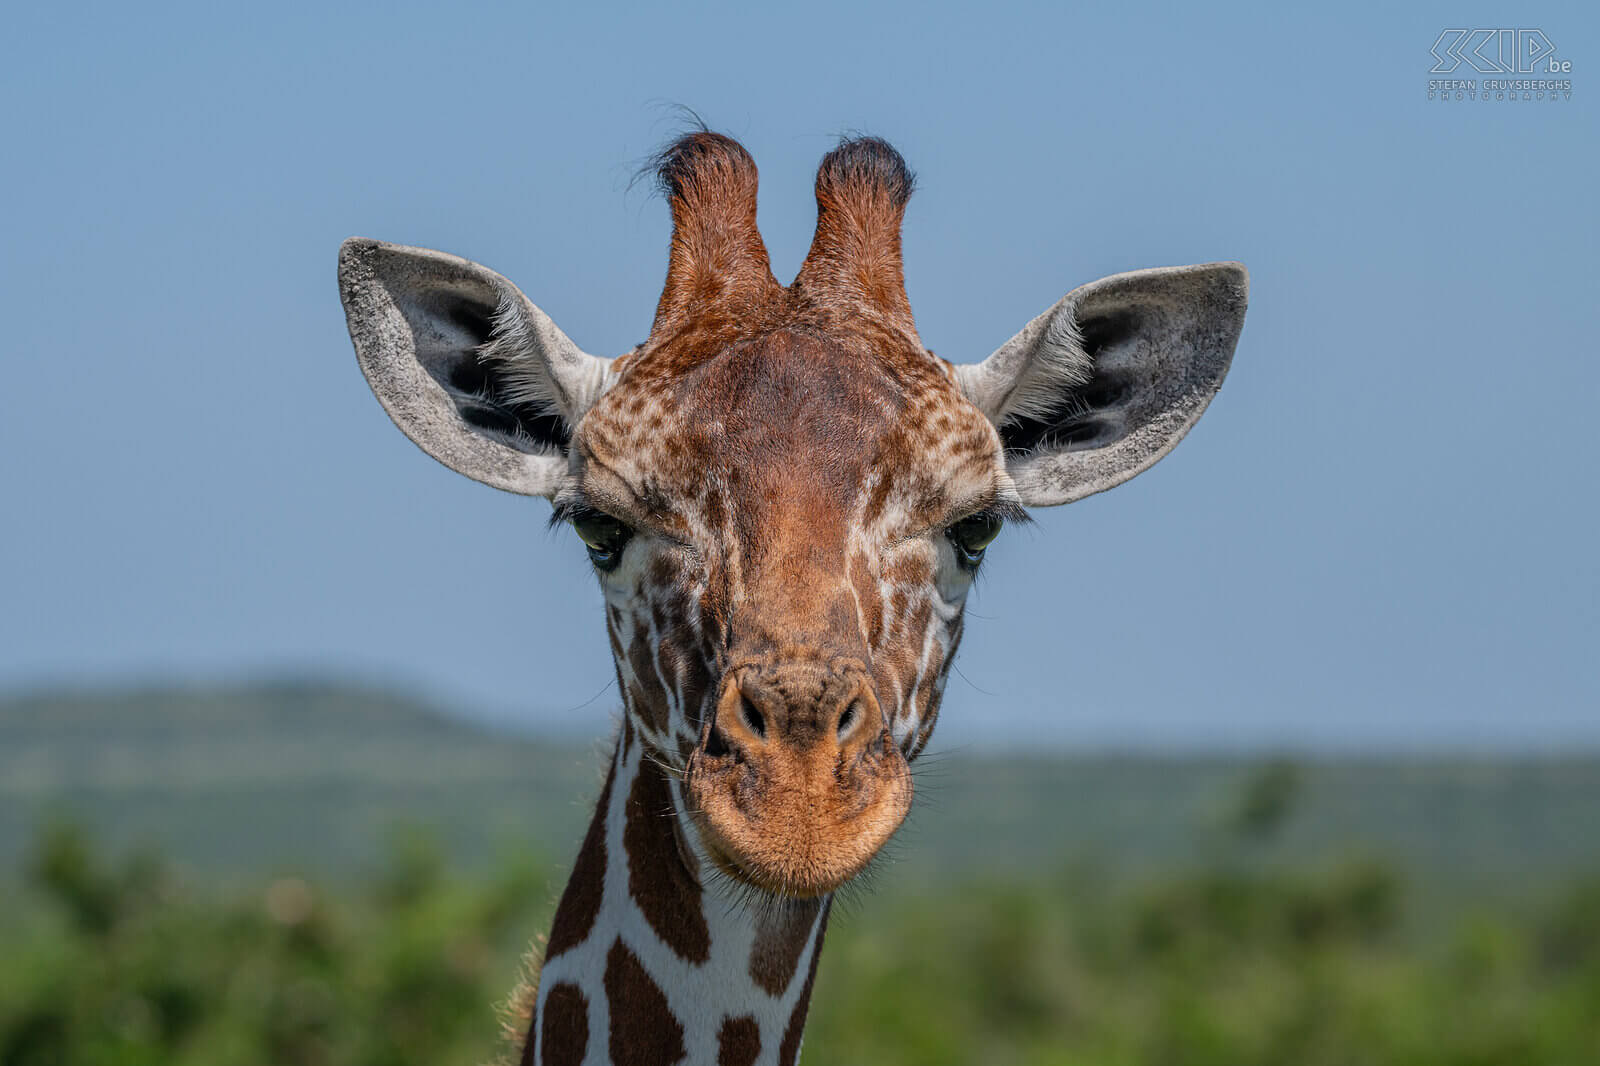 Solio - Reticulated giraffe The reticulated giraffe is a subspecies of giraffe native to Somalia, southern Ethiopia and northern Kenya. Stefan Cruysberghs